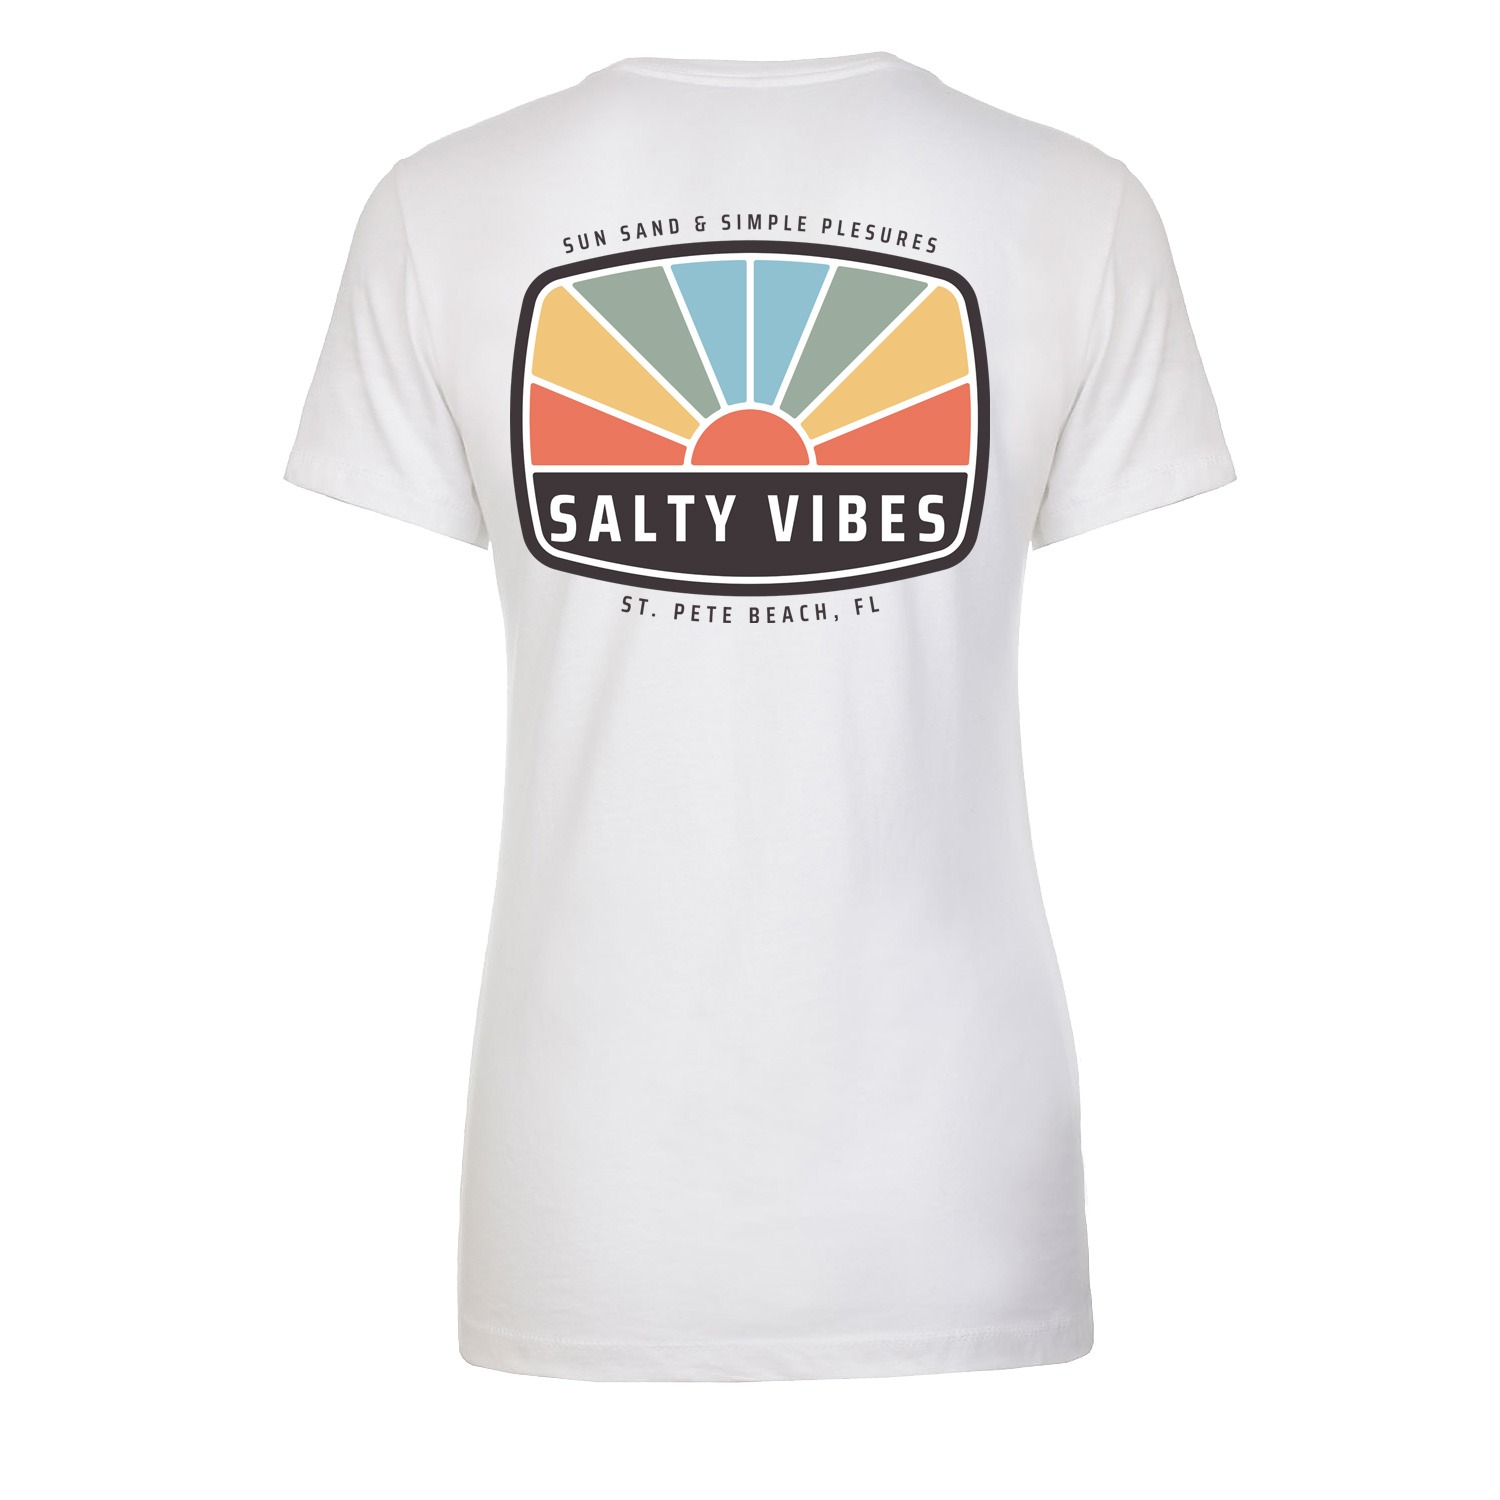 Salty Vibes Sunburst Women's Fitted T-shirt - White, 2XL